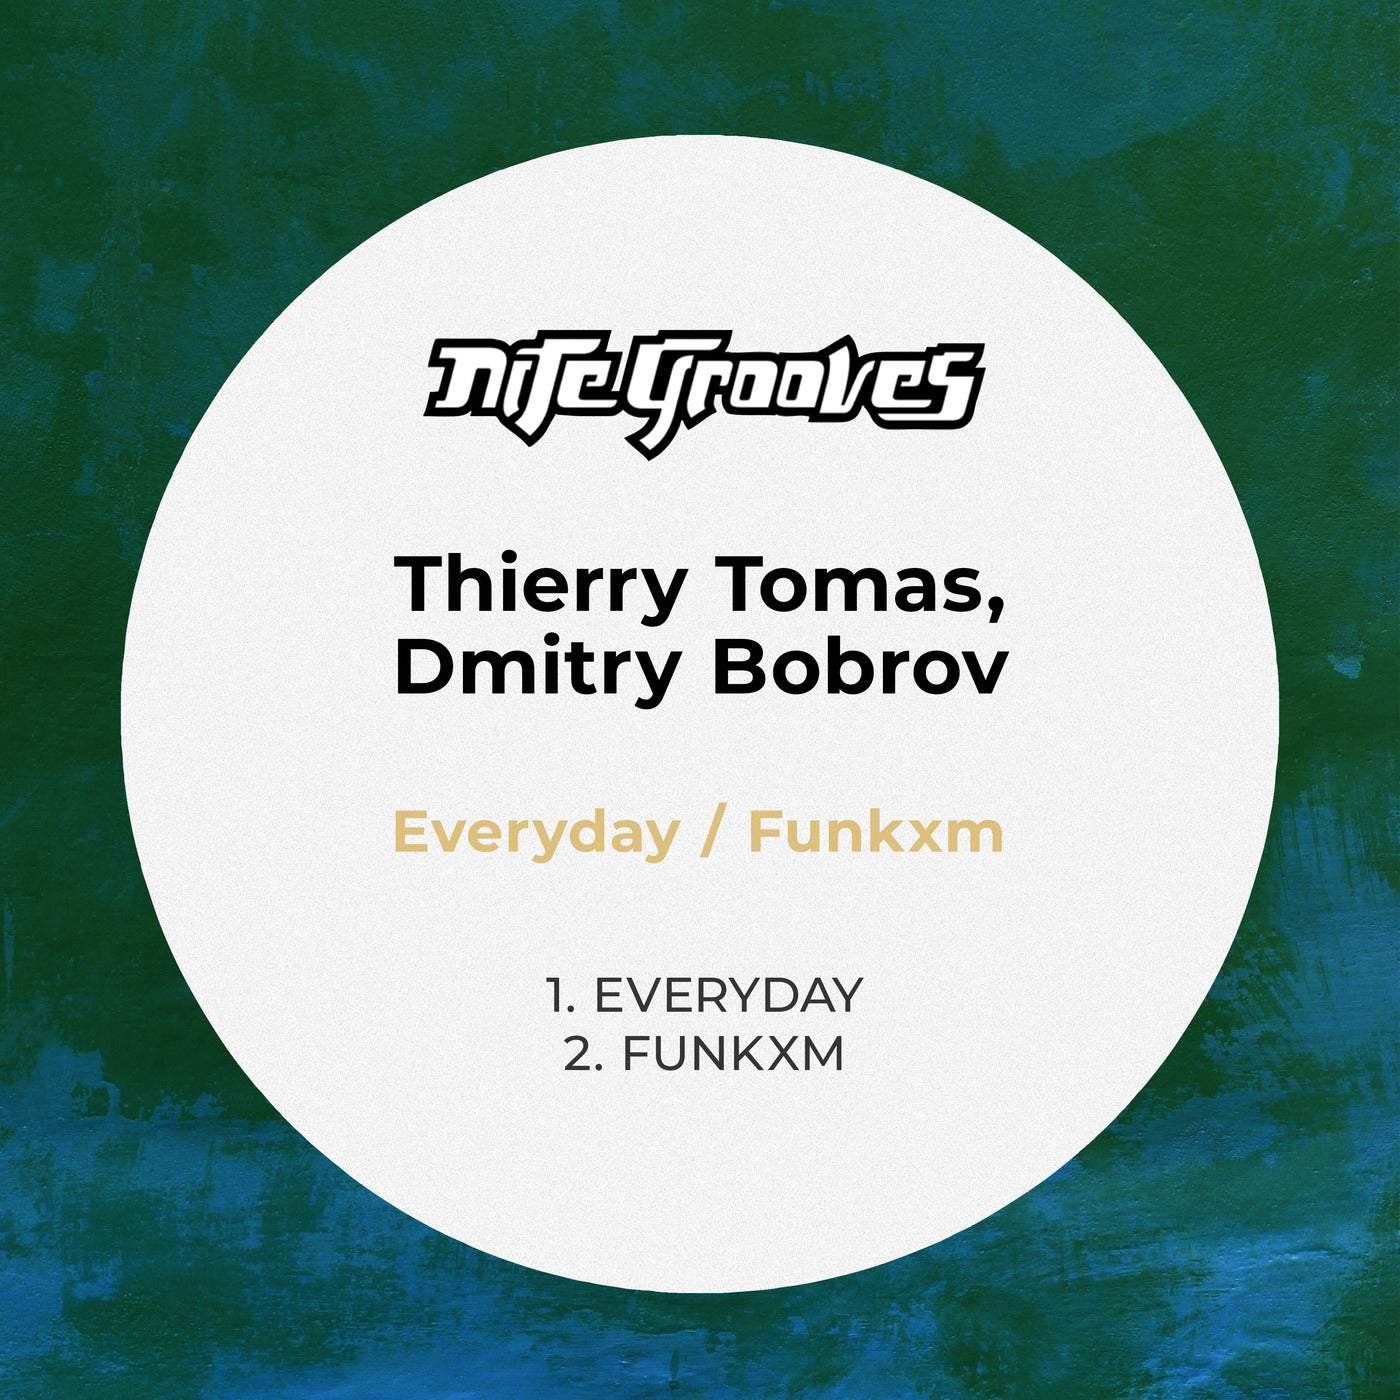 Download Thierry Tomas, Dmitry Bobrov - Everyday / Funkxm on Electrobuzz